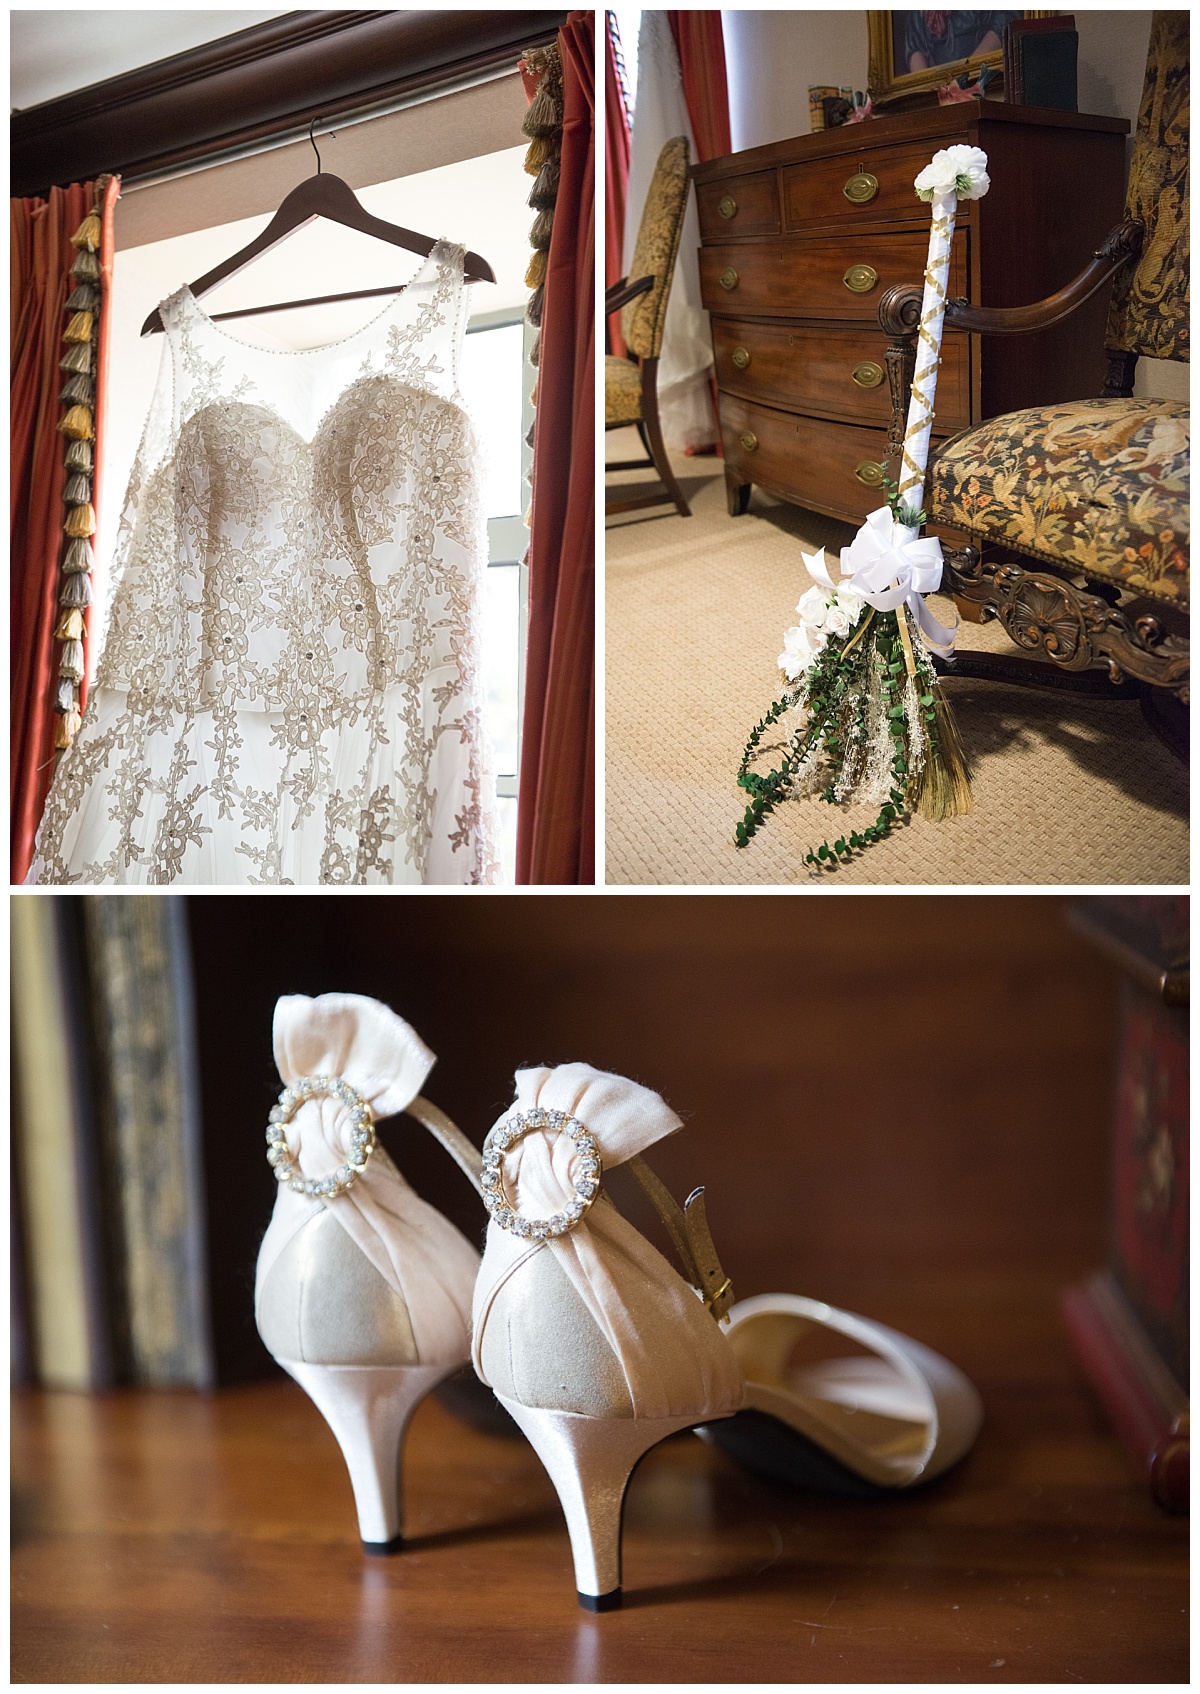 Bridal details and broom